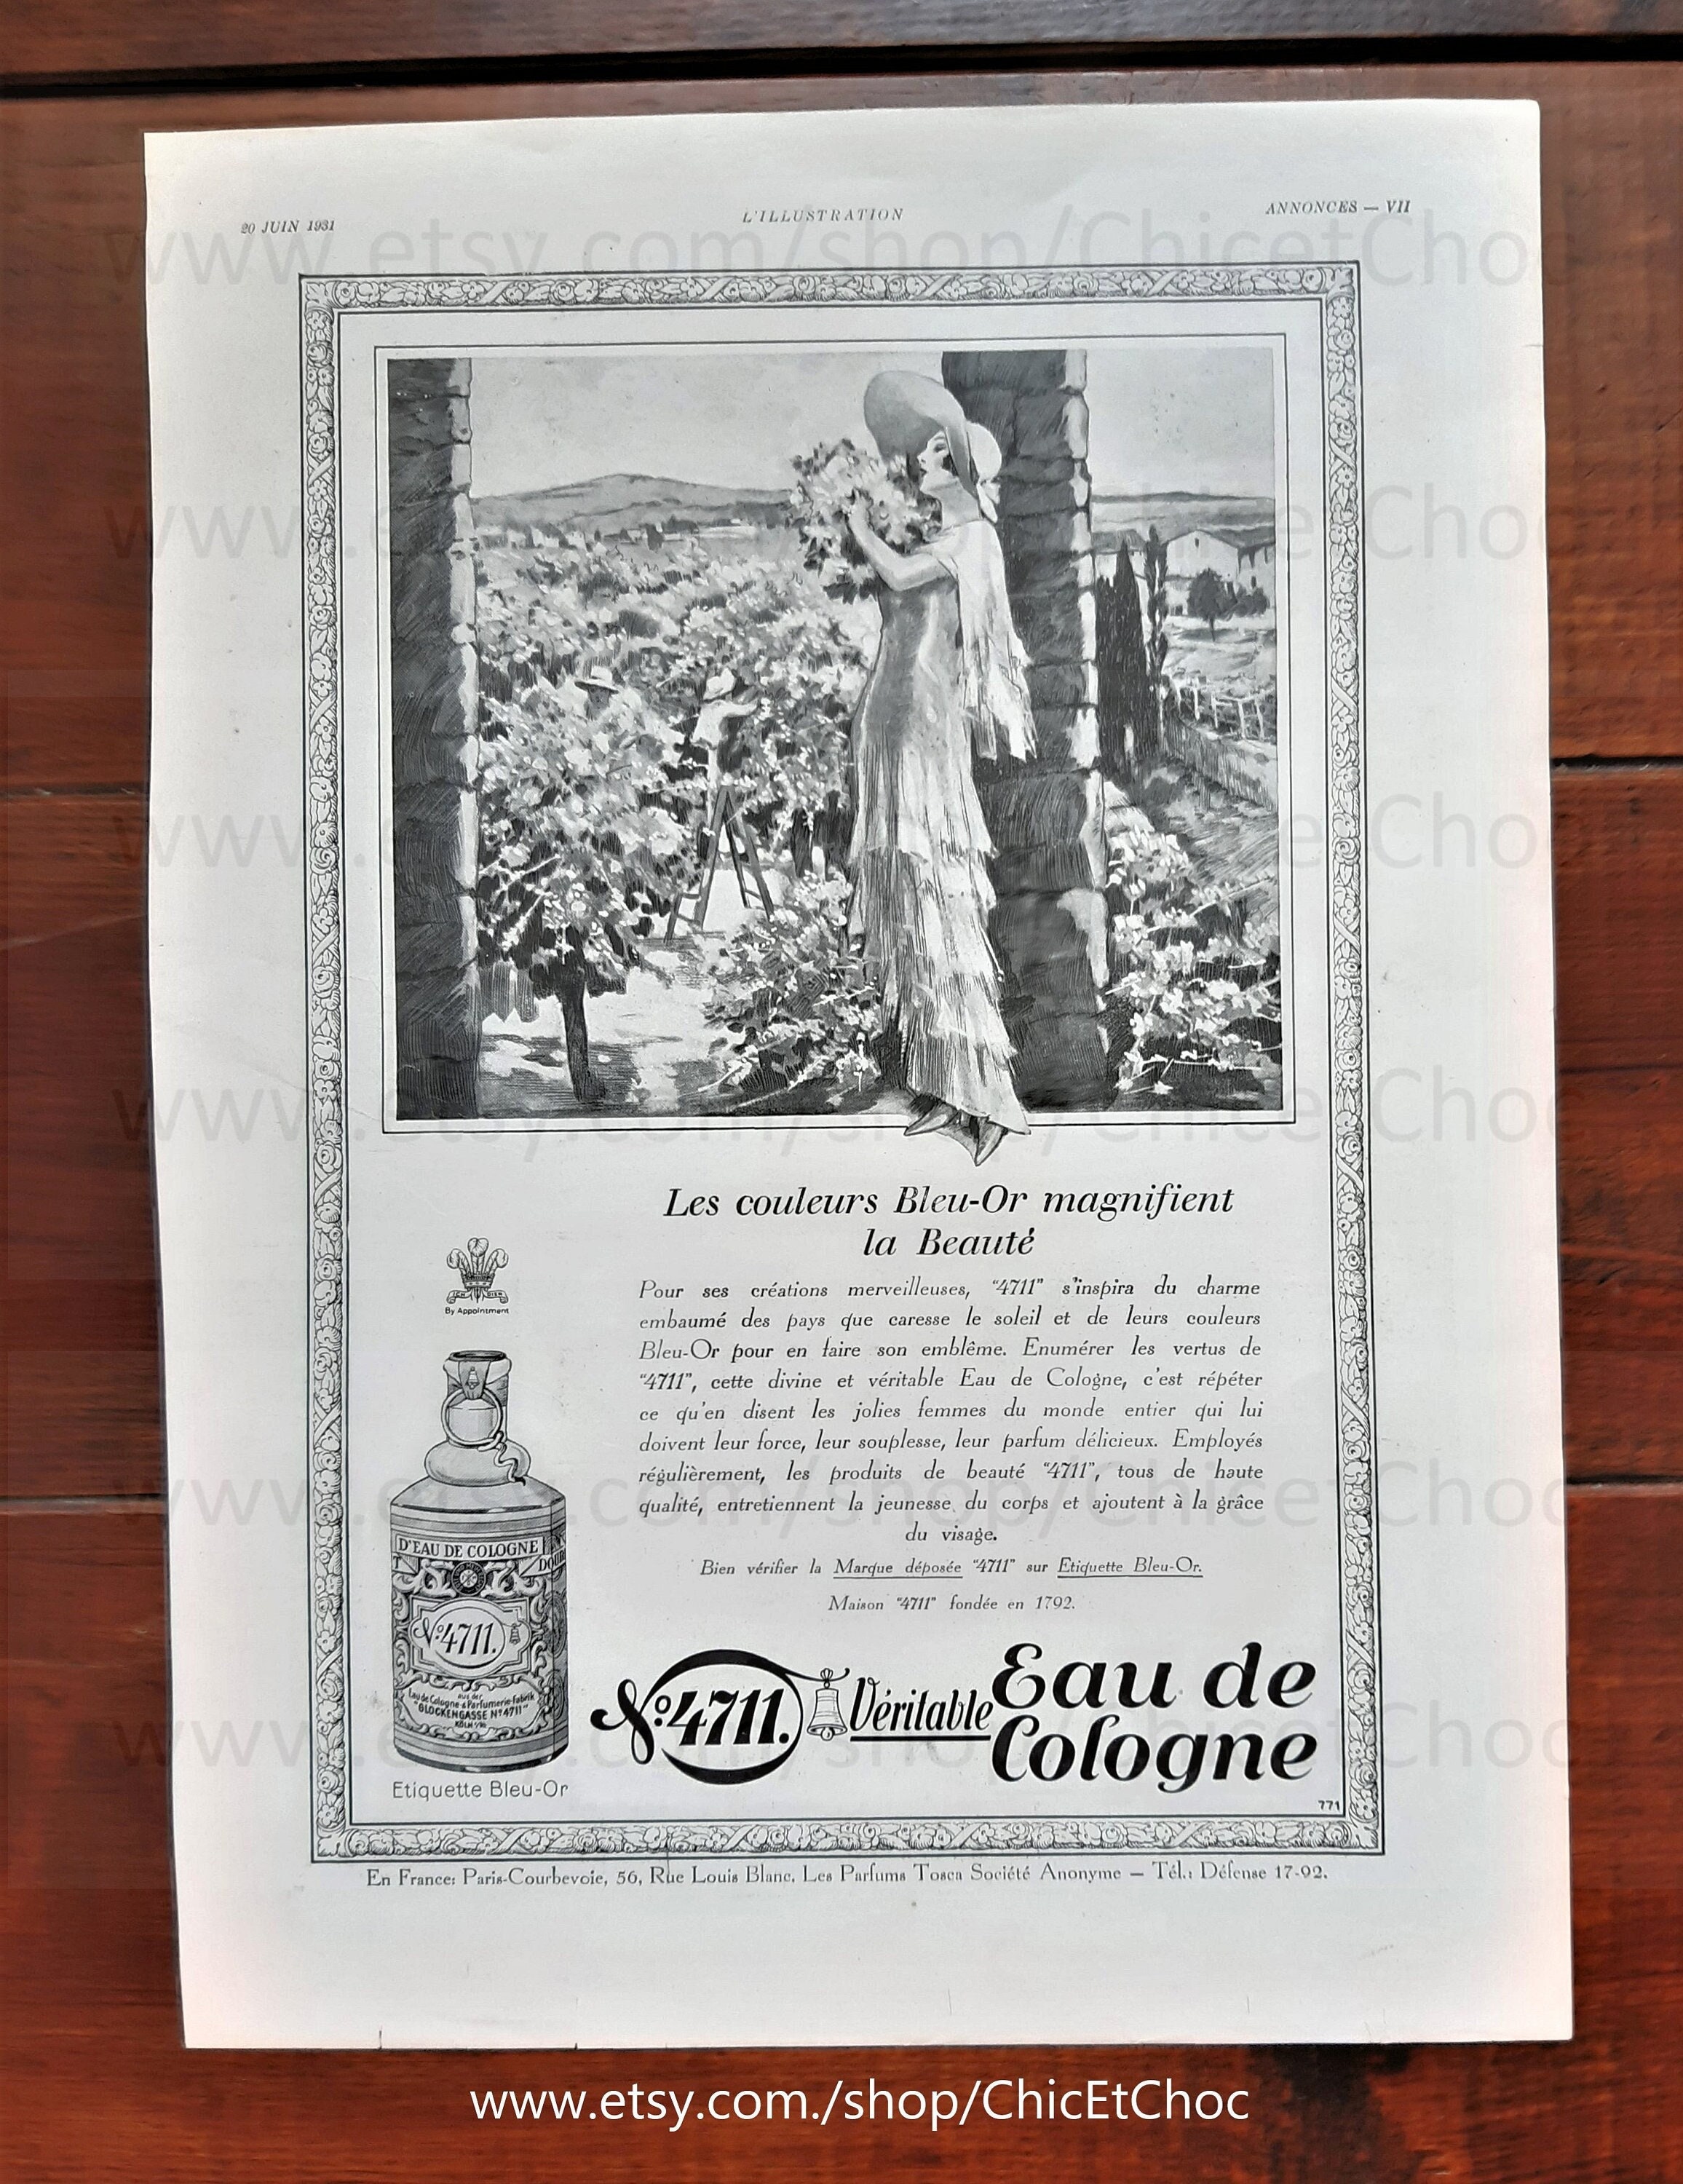 Le 1940 Rouge de Chanel Chanel perfume - a fragrance for women 1931